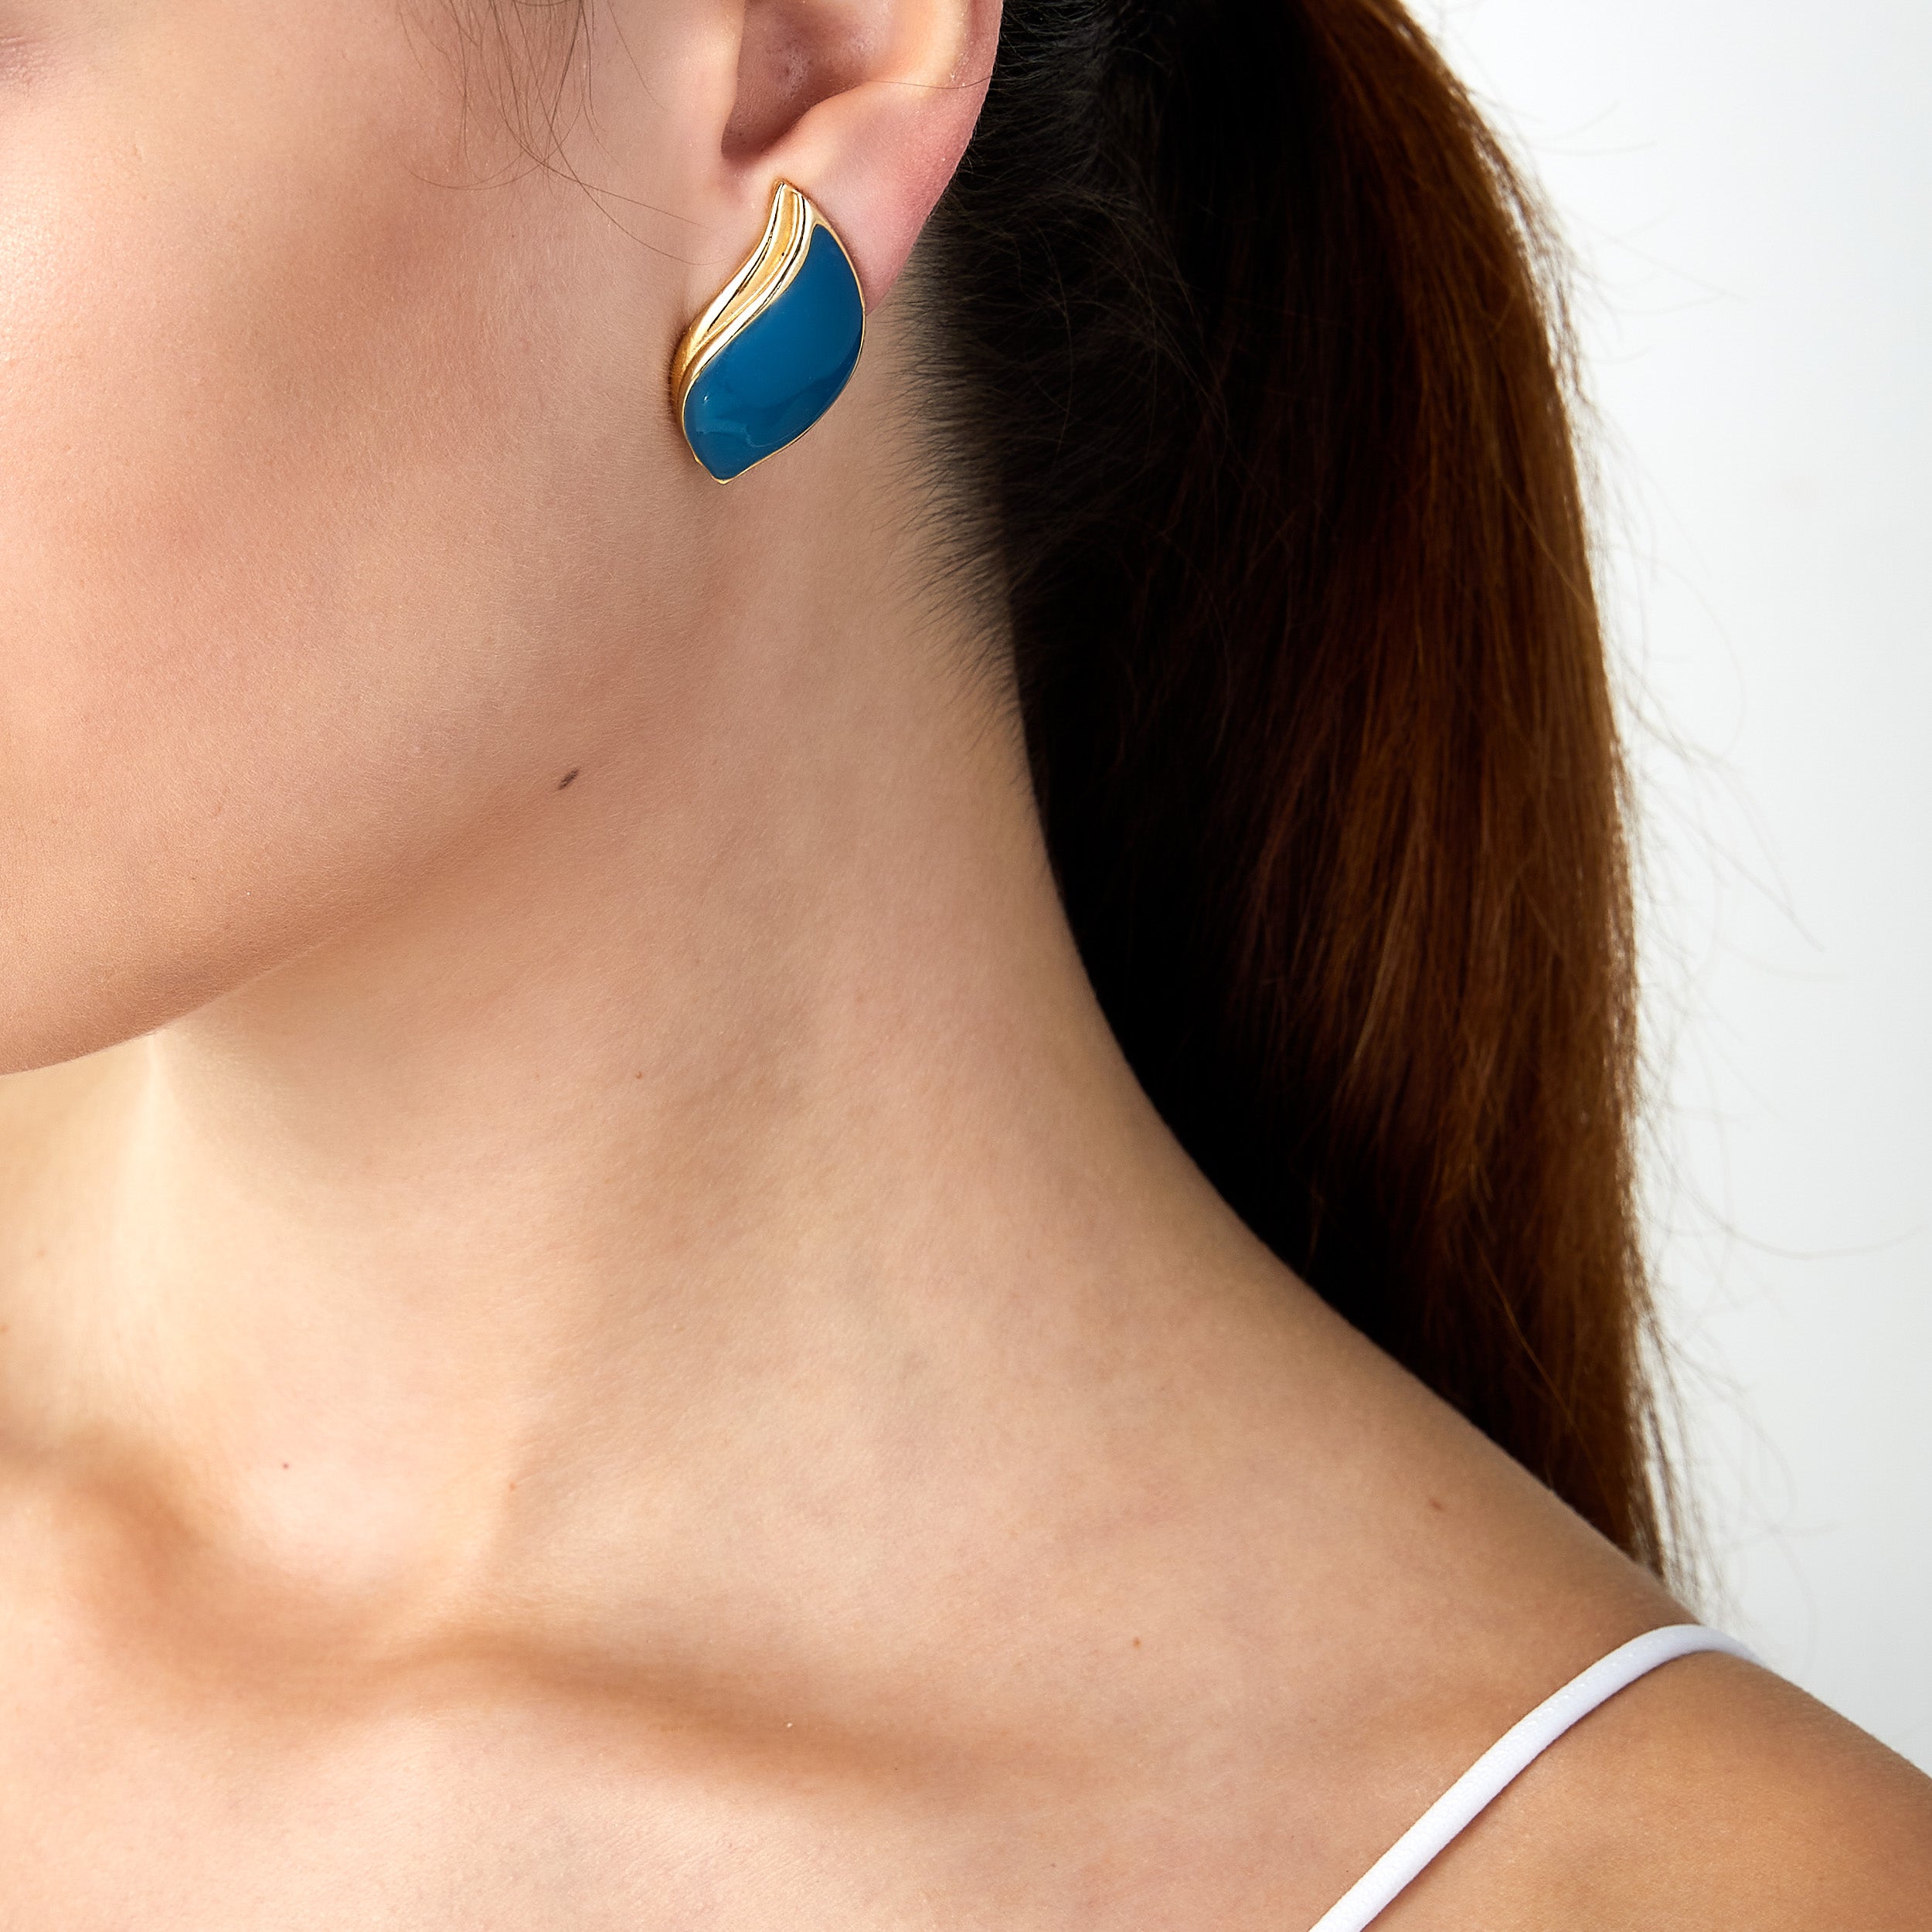 Vintage leaf clip earrings in teal enamel worn on woman’s ear